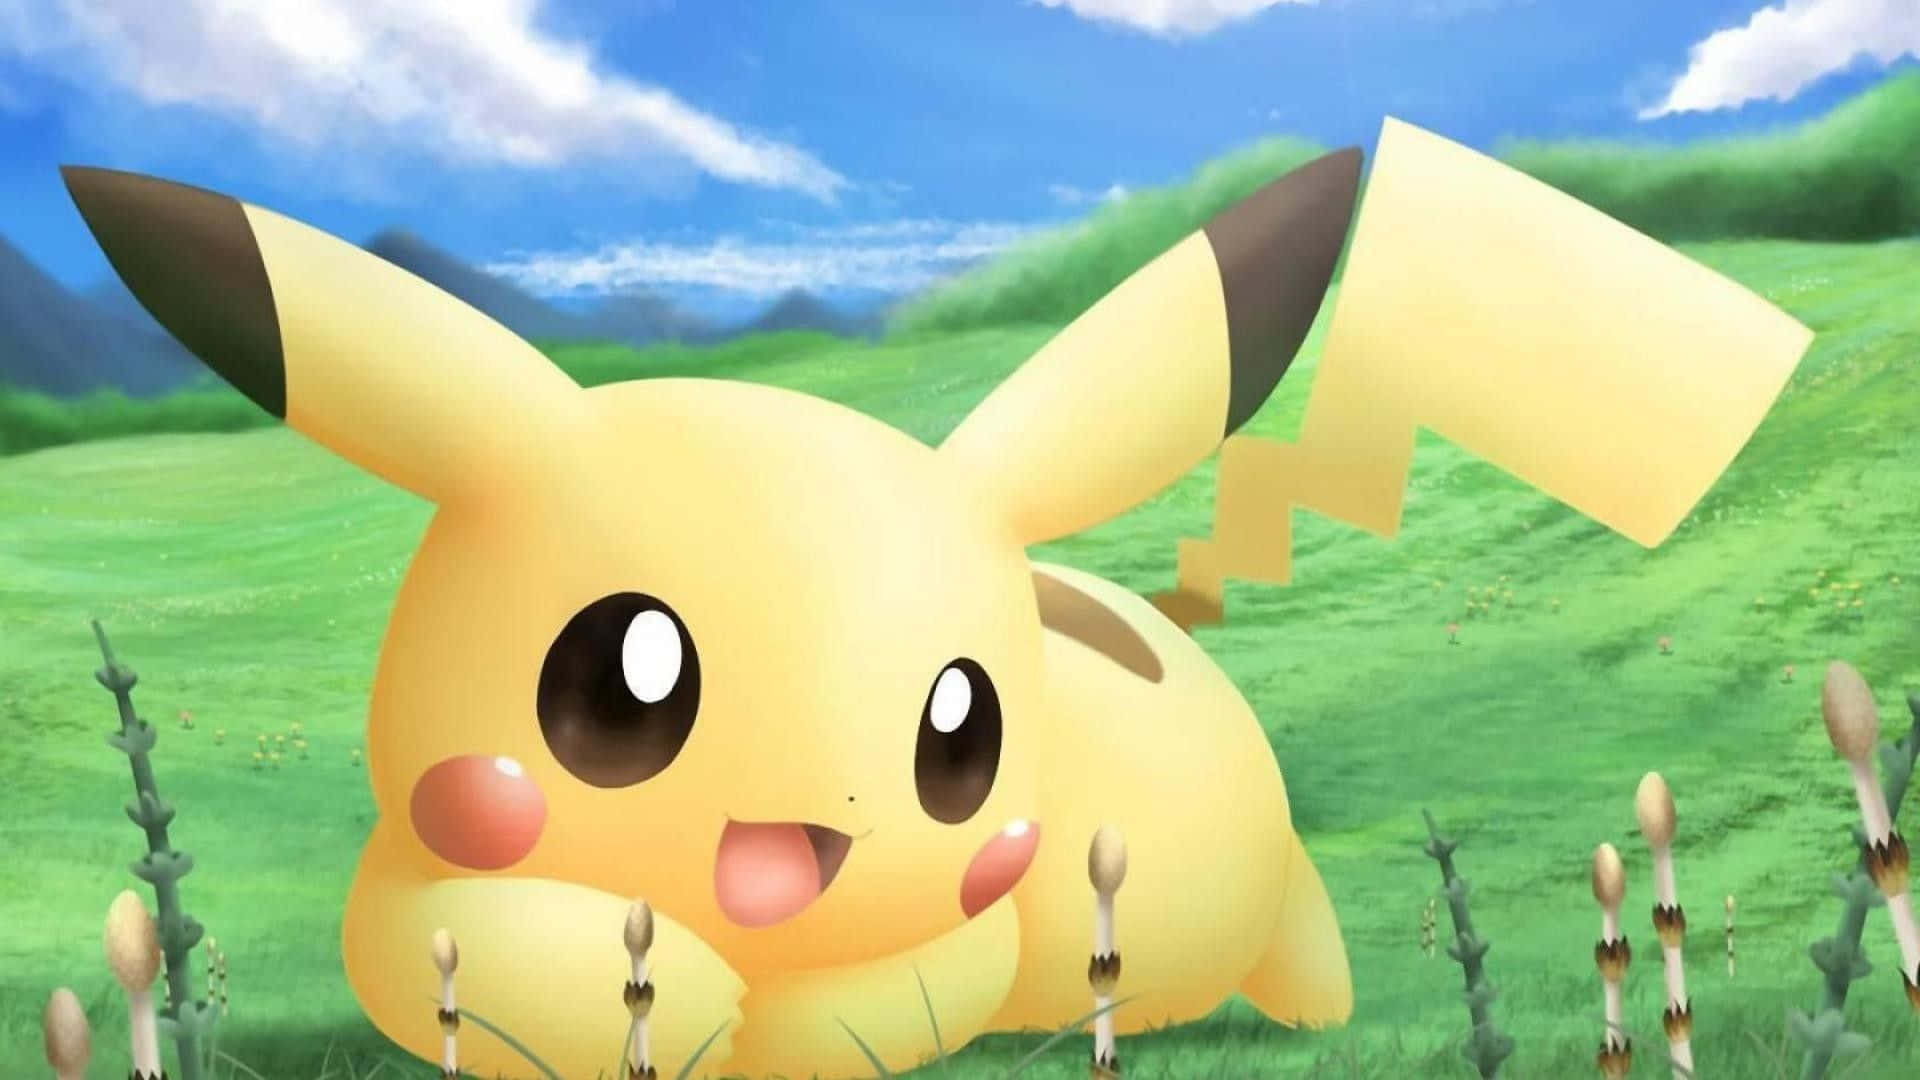 Carinobaby Pikachu Sdraiato Sull'erba Sfondo